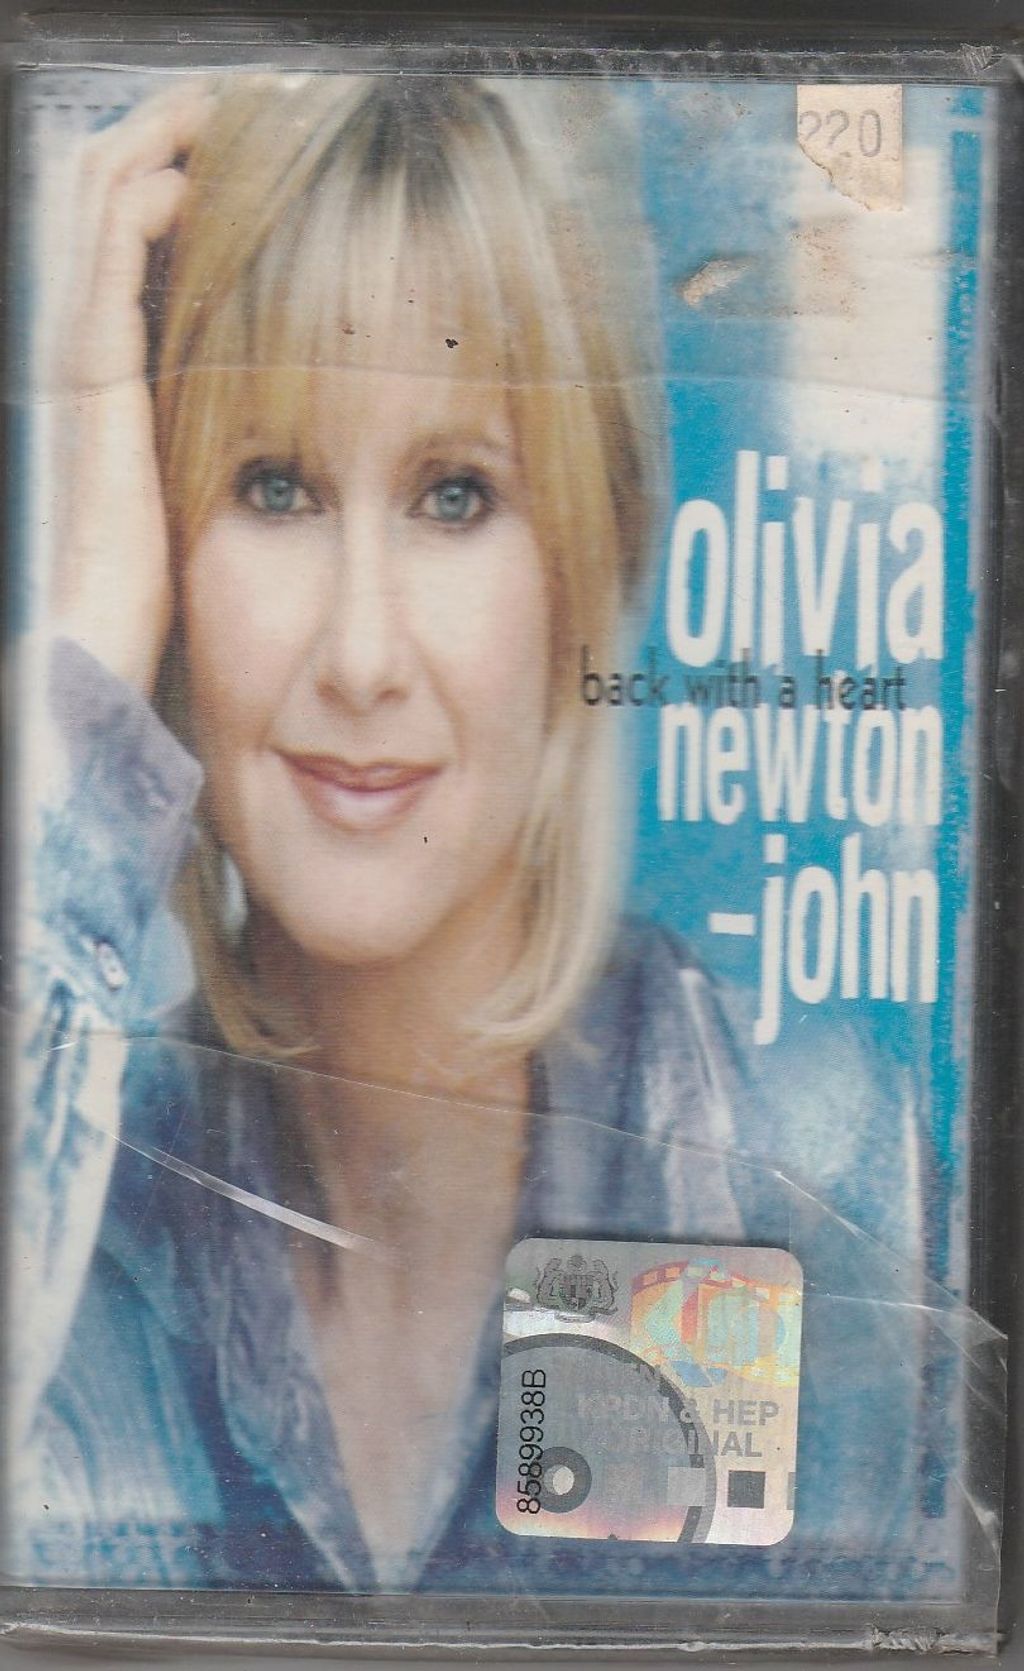 OLIVIA NEWTON-JOHN Back With A Heart CASSETTE.jpg